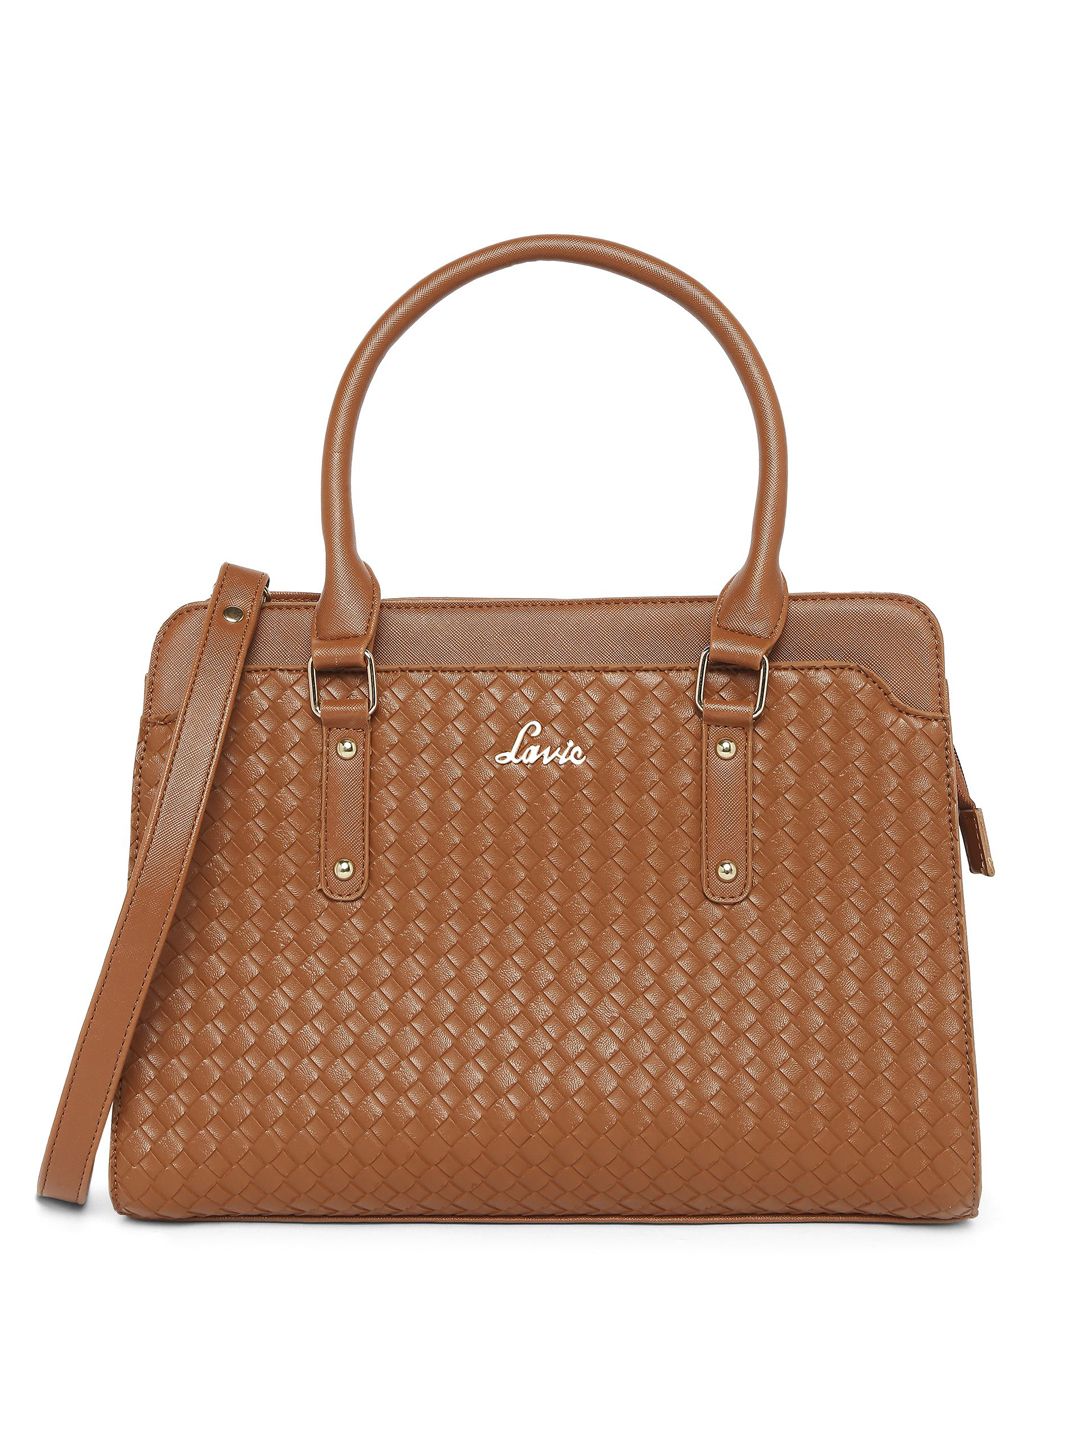 Lavie Brown Textured Structured Handheld Bag Price in India